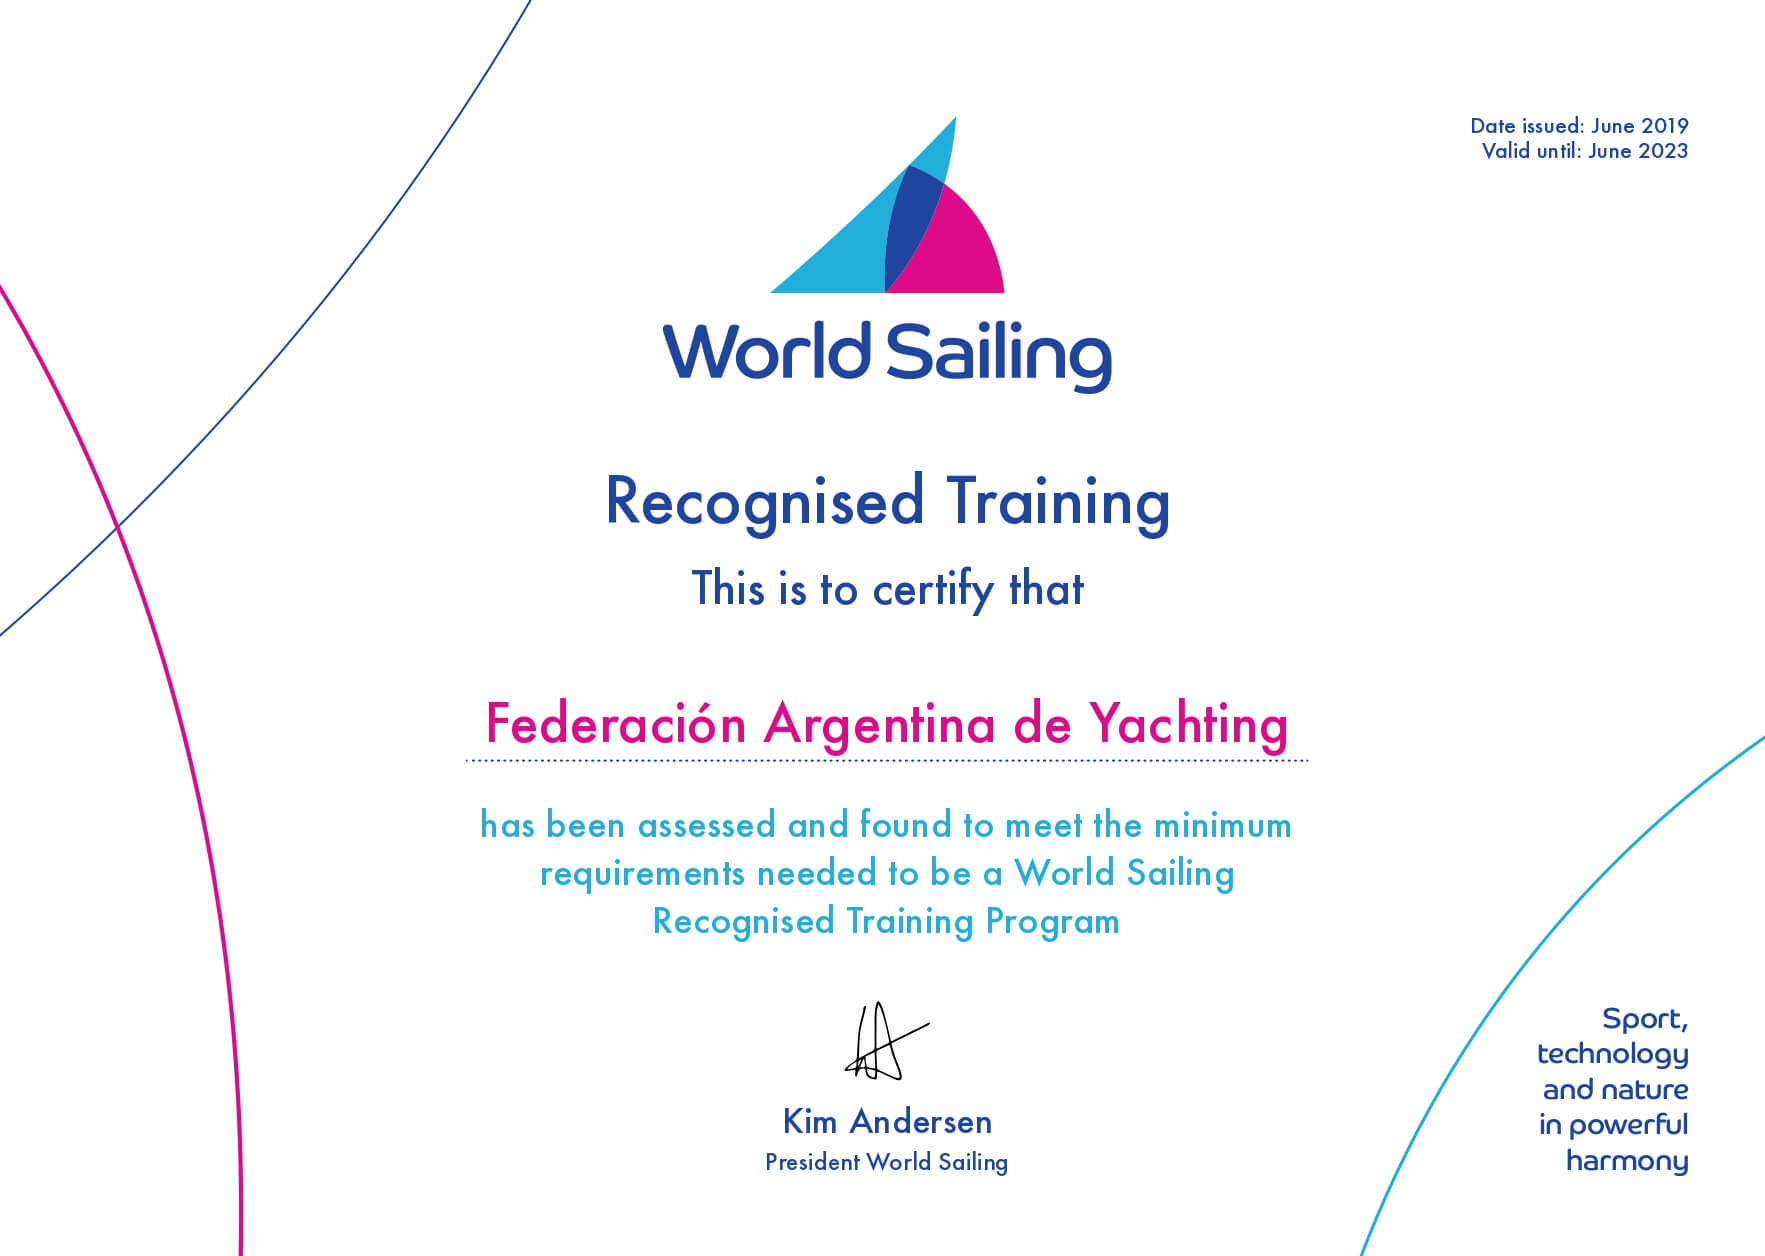 World Sailing Training Program Certificate - Certificado de Requisitos de Entrenamiento World Sailing - FAY